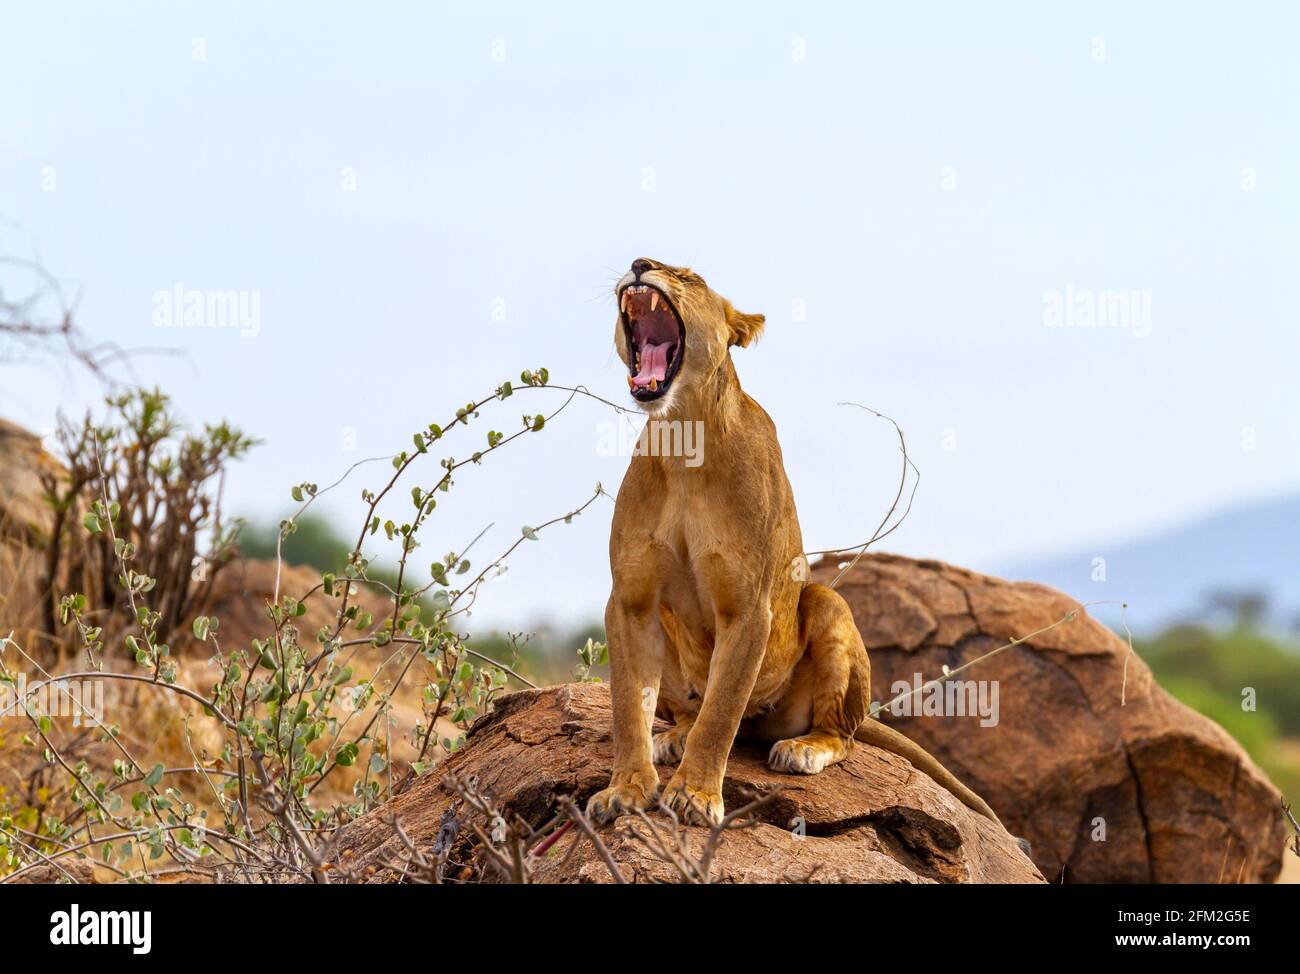 Lioness Lion 'Panthera Leo' yawns with mouth open wide showing sharp teeth while sitting upright on rocks. Samburu National Reserve, Kenya, Africa. Stock Photo